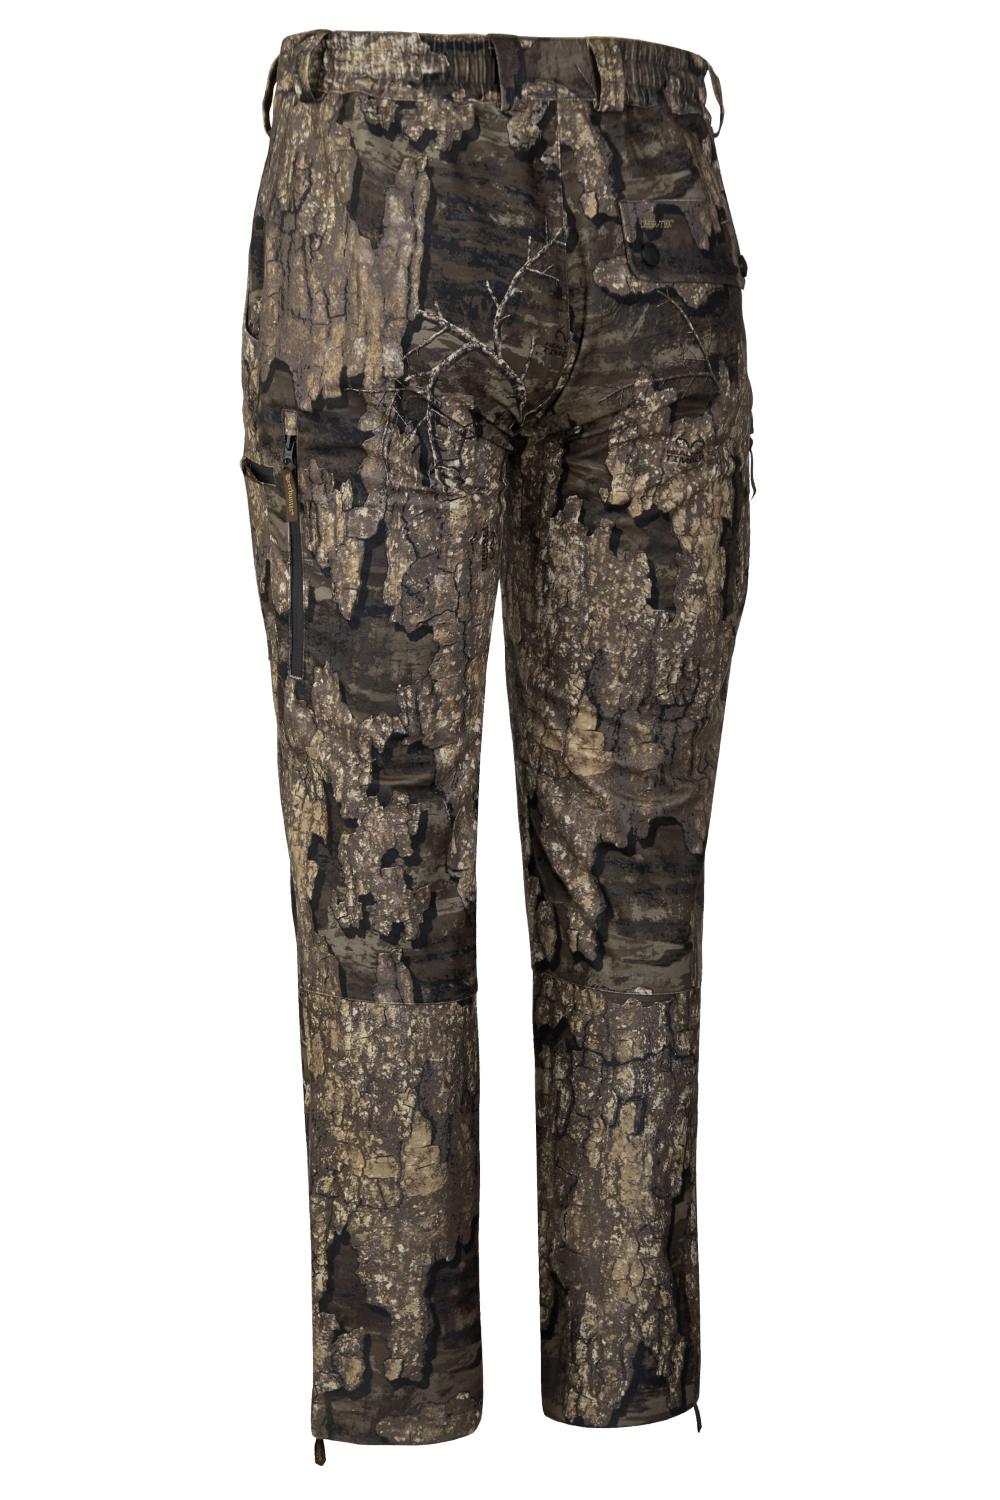 Deerhunter Pro Gamekeeper Boot Trousers In RealTree Timber 